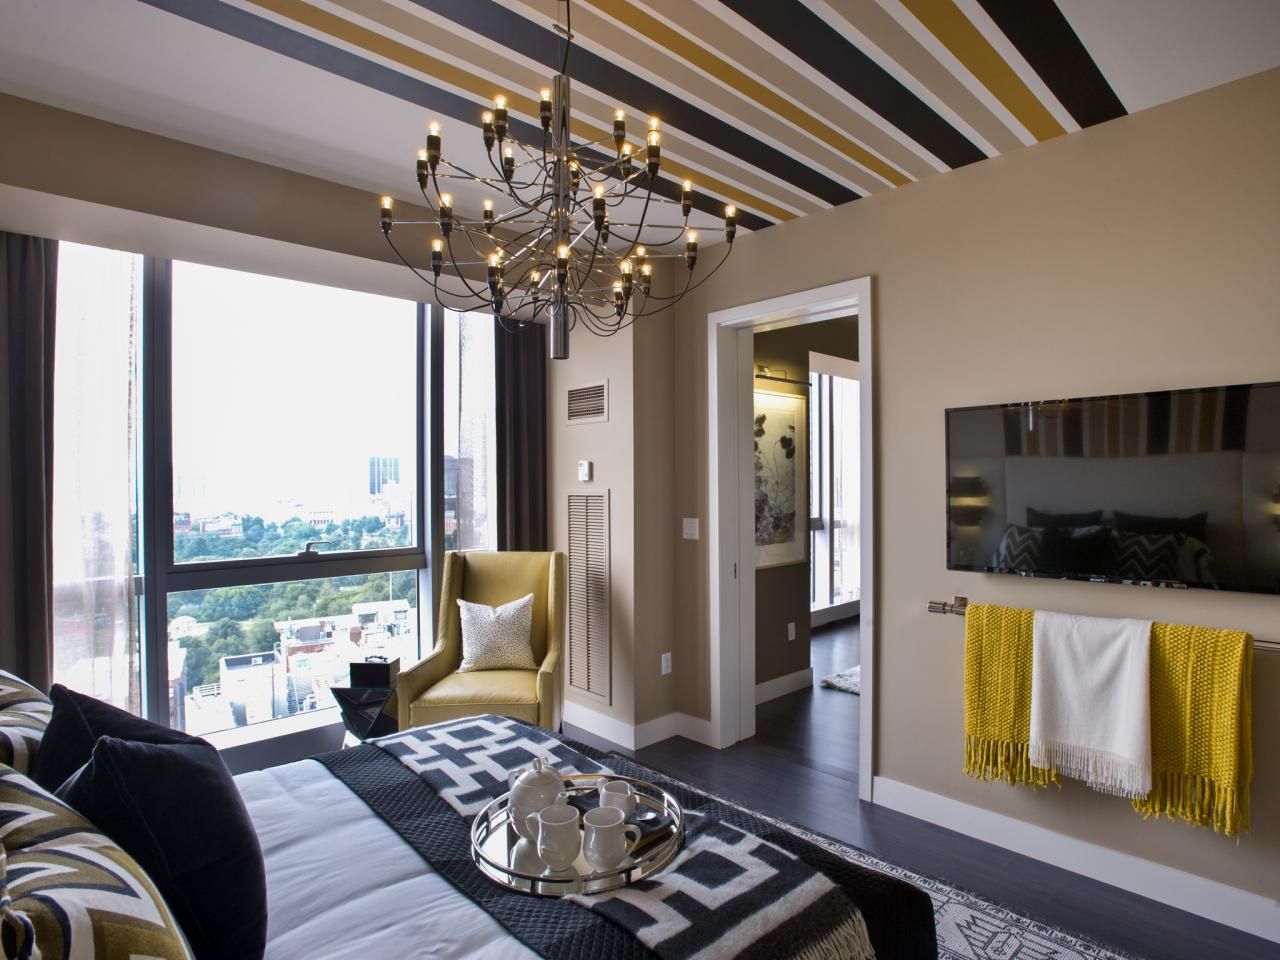 Bedroom urban master hgtv oasis condo chandelier room modern accents yellow metal win designs sign gold windows boston